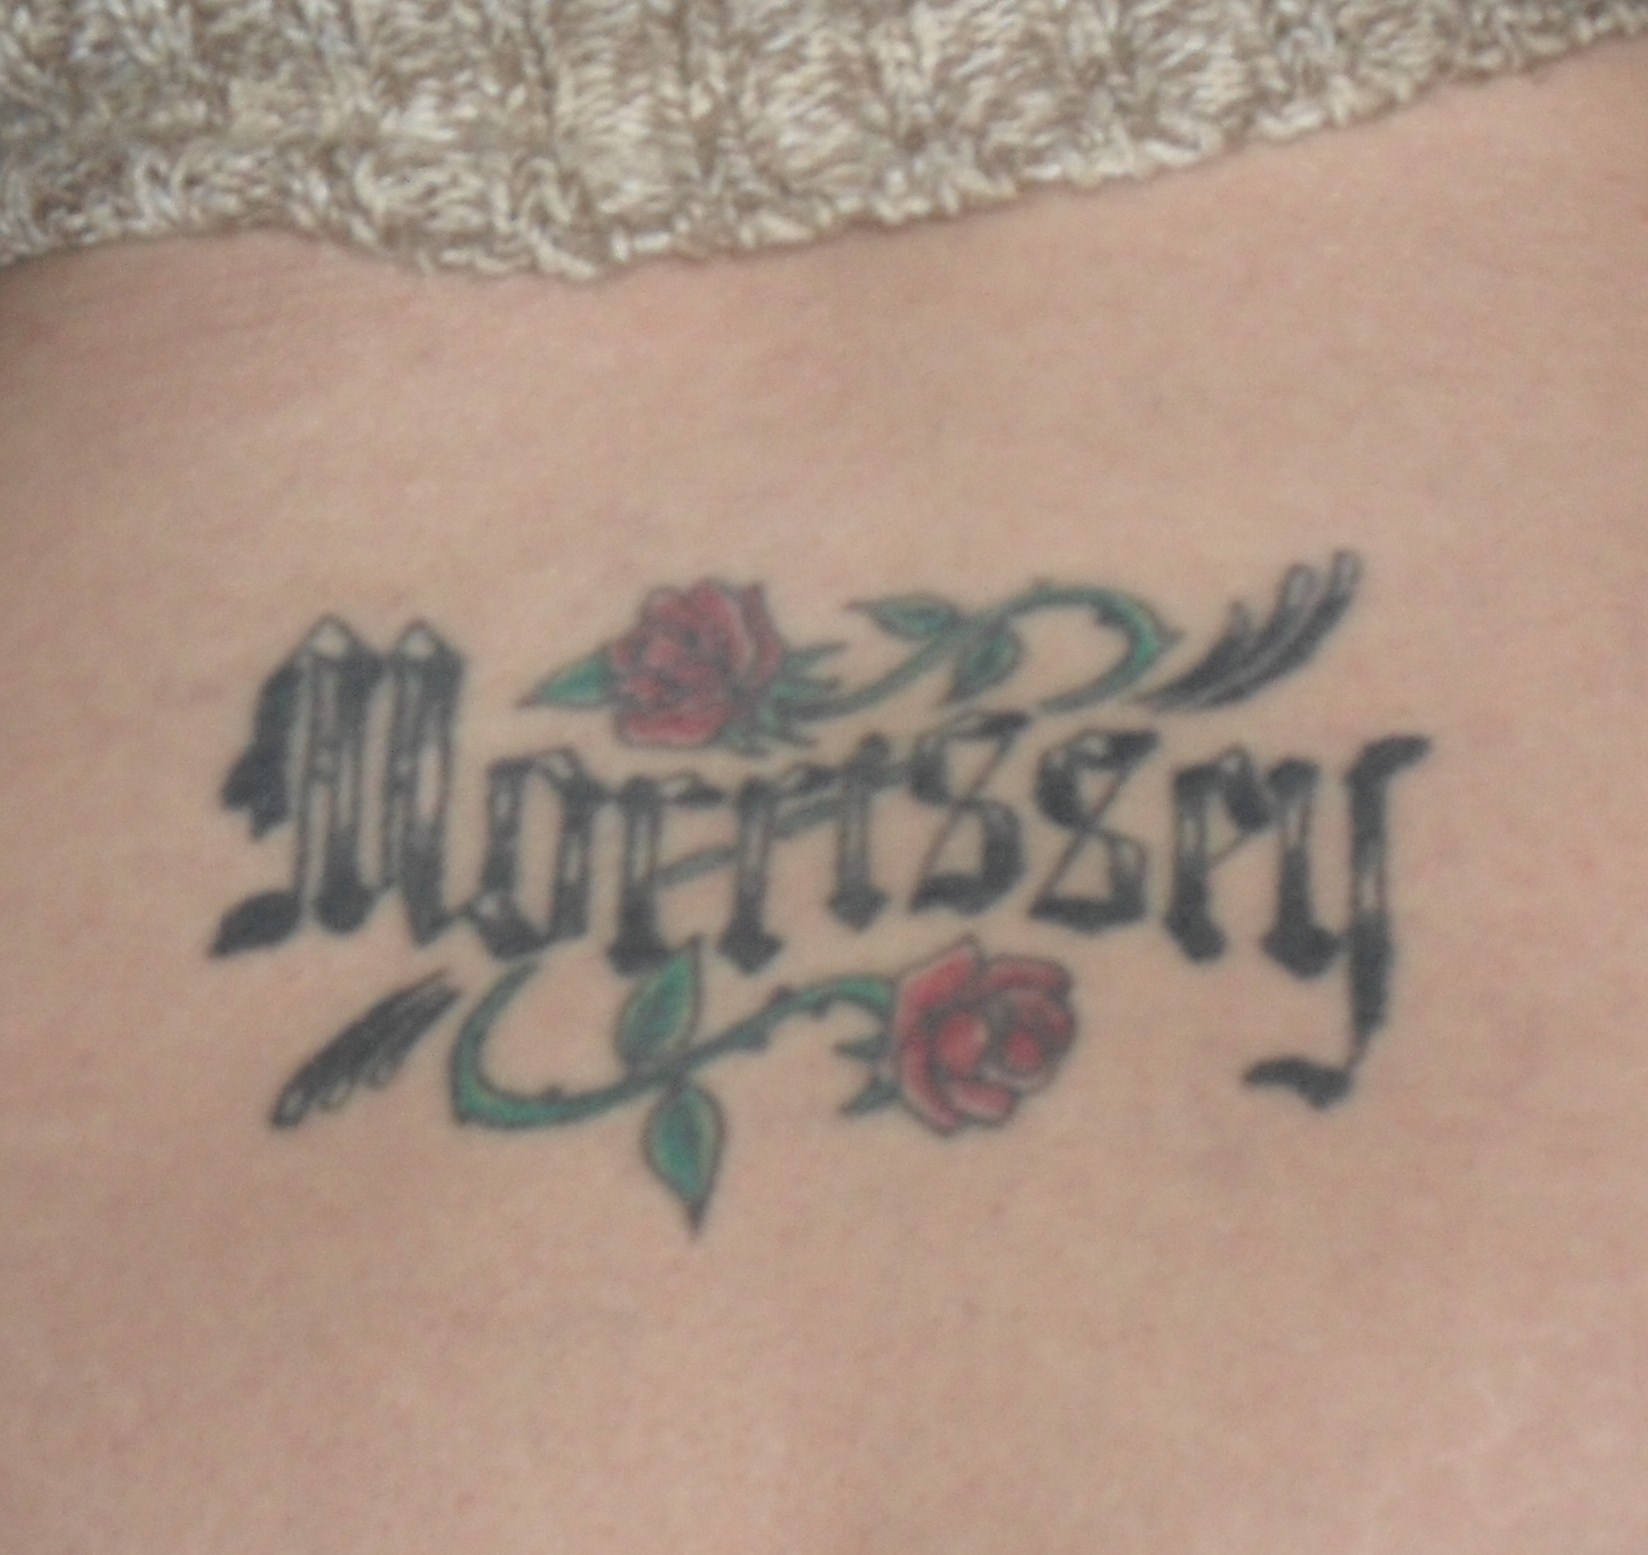 My Morrissey tattoo